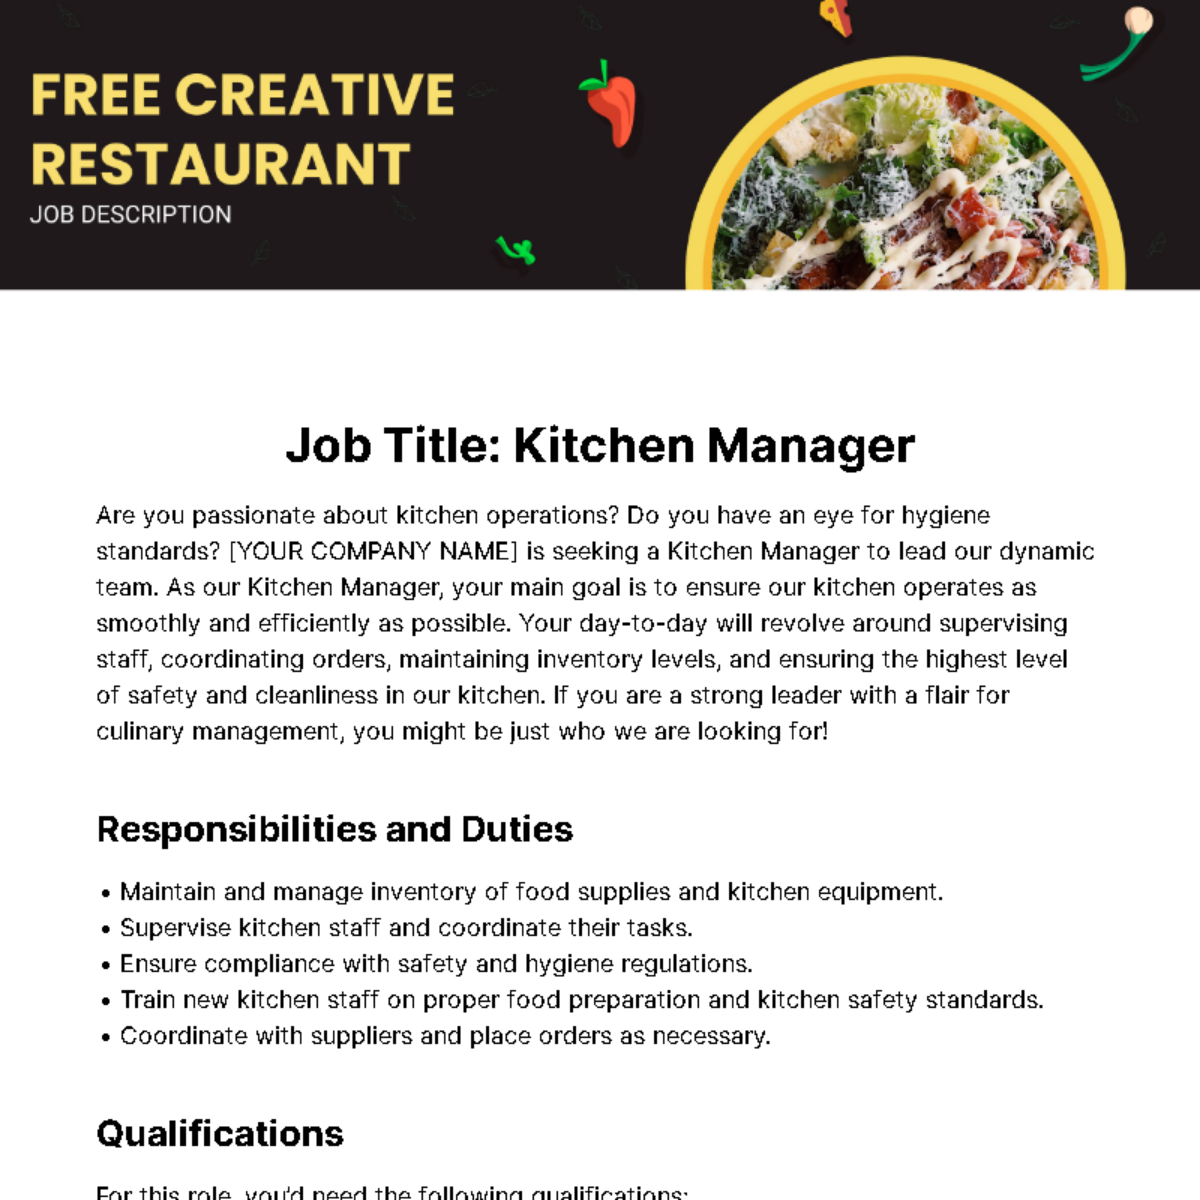 Creative Restaurant Job Description Template